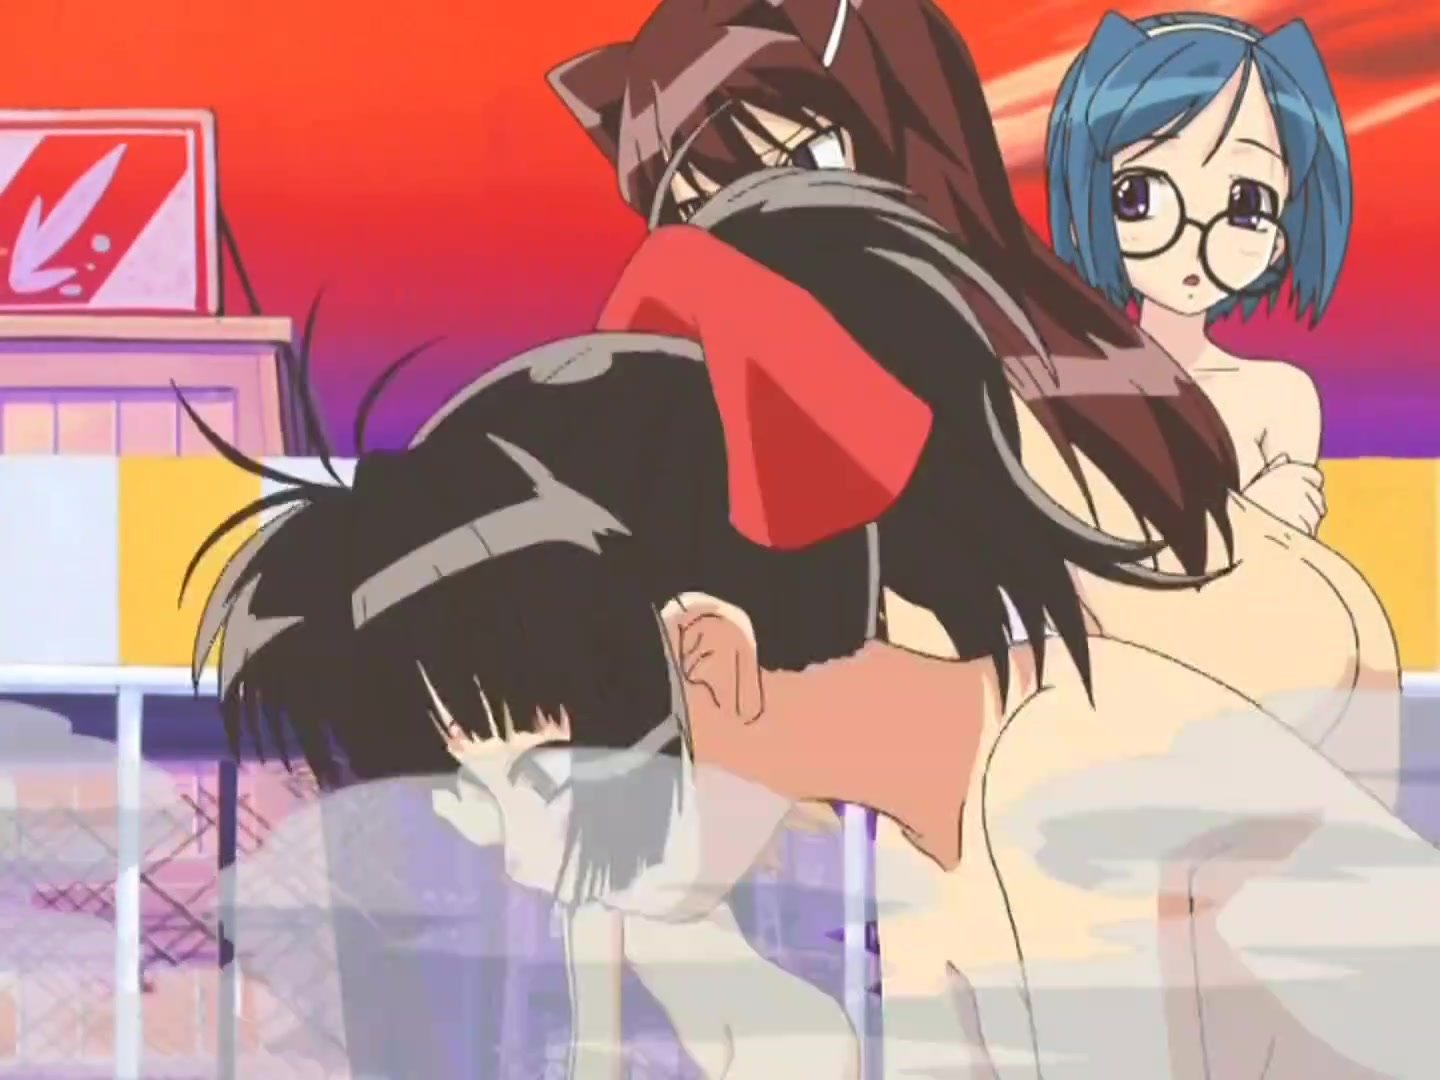 Embarrassed nude female anime